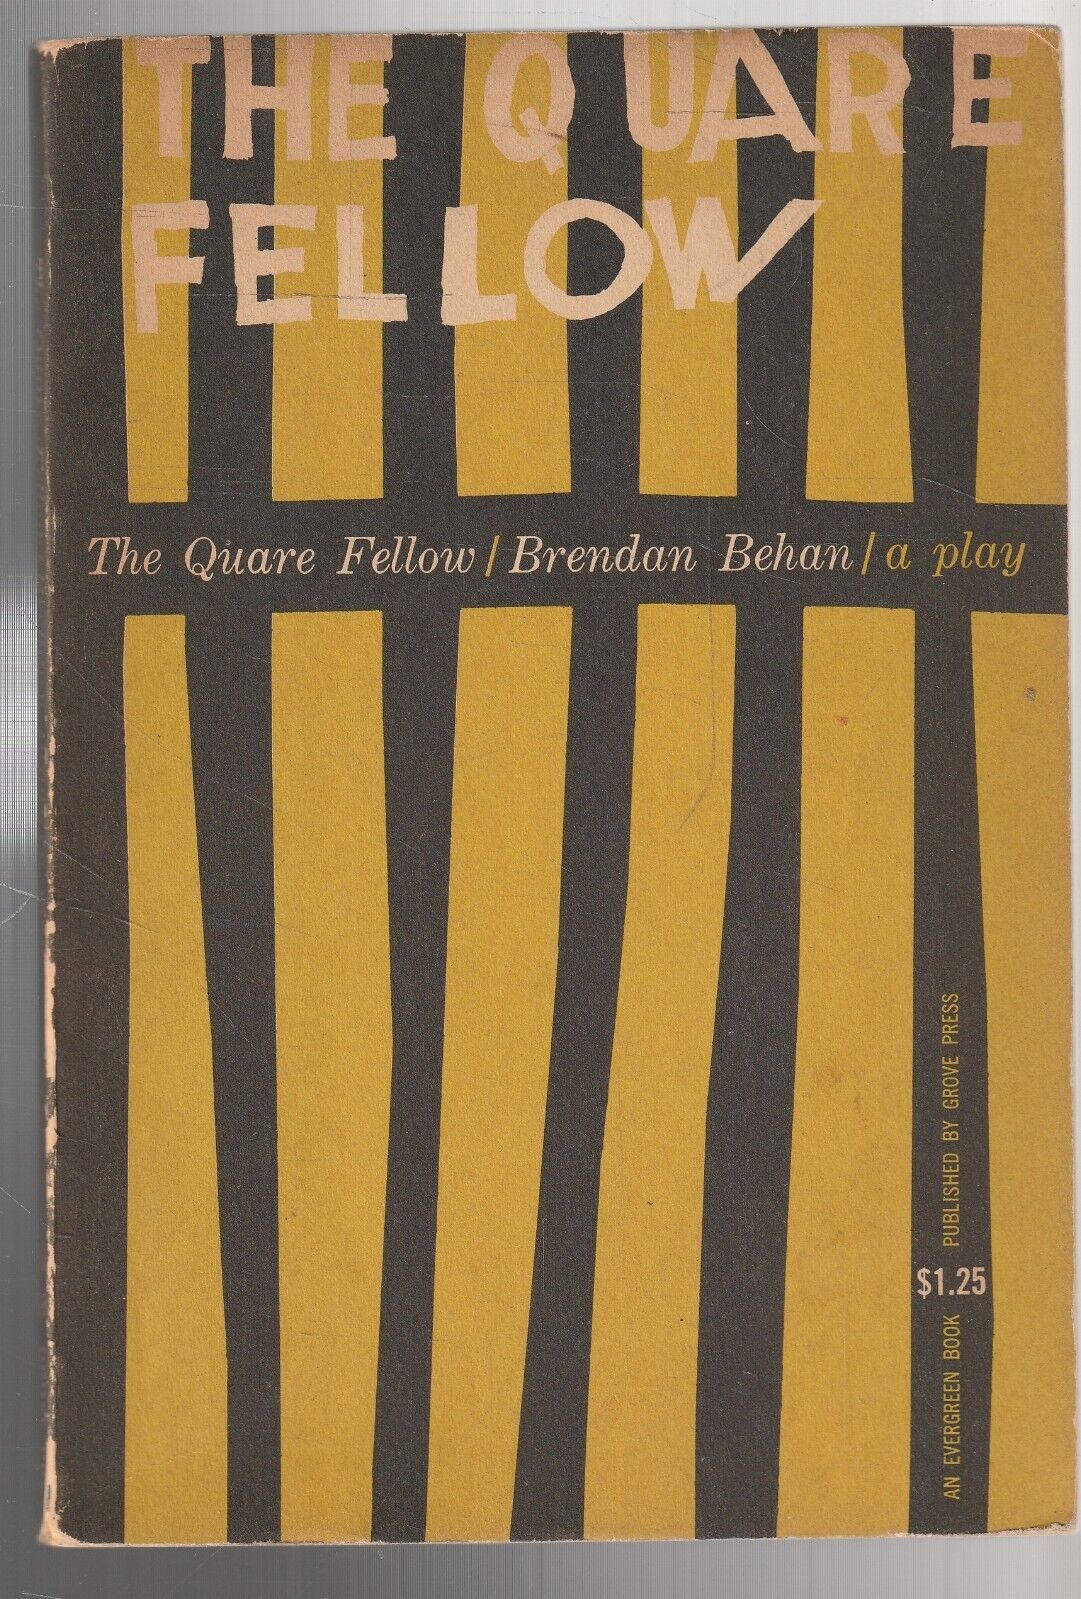 MEMORABILIA ,THE QUARE FELLOW , A PLAY by BRENDAN BEHAN , 1956 paperback NY